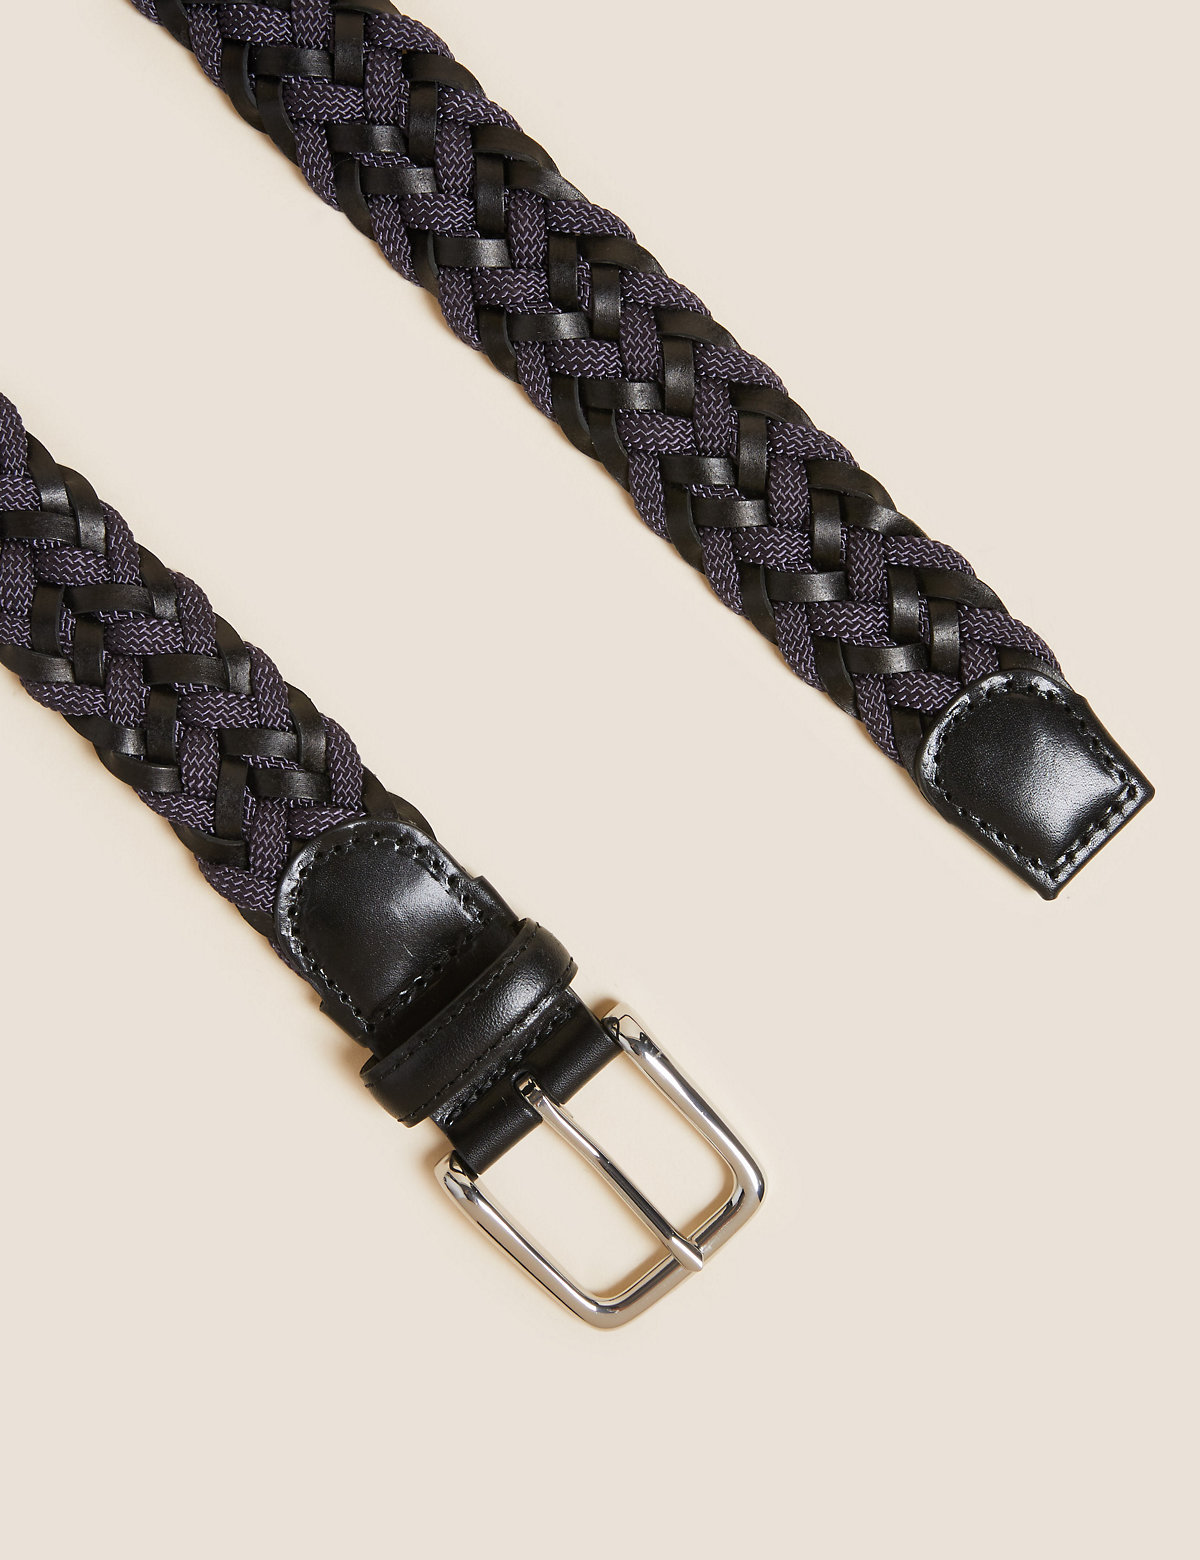 Leather Textured Belt